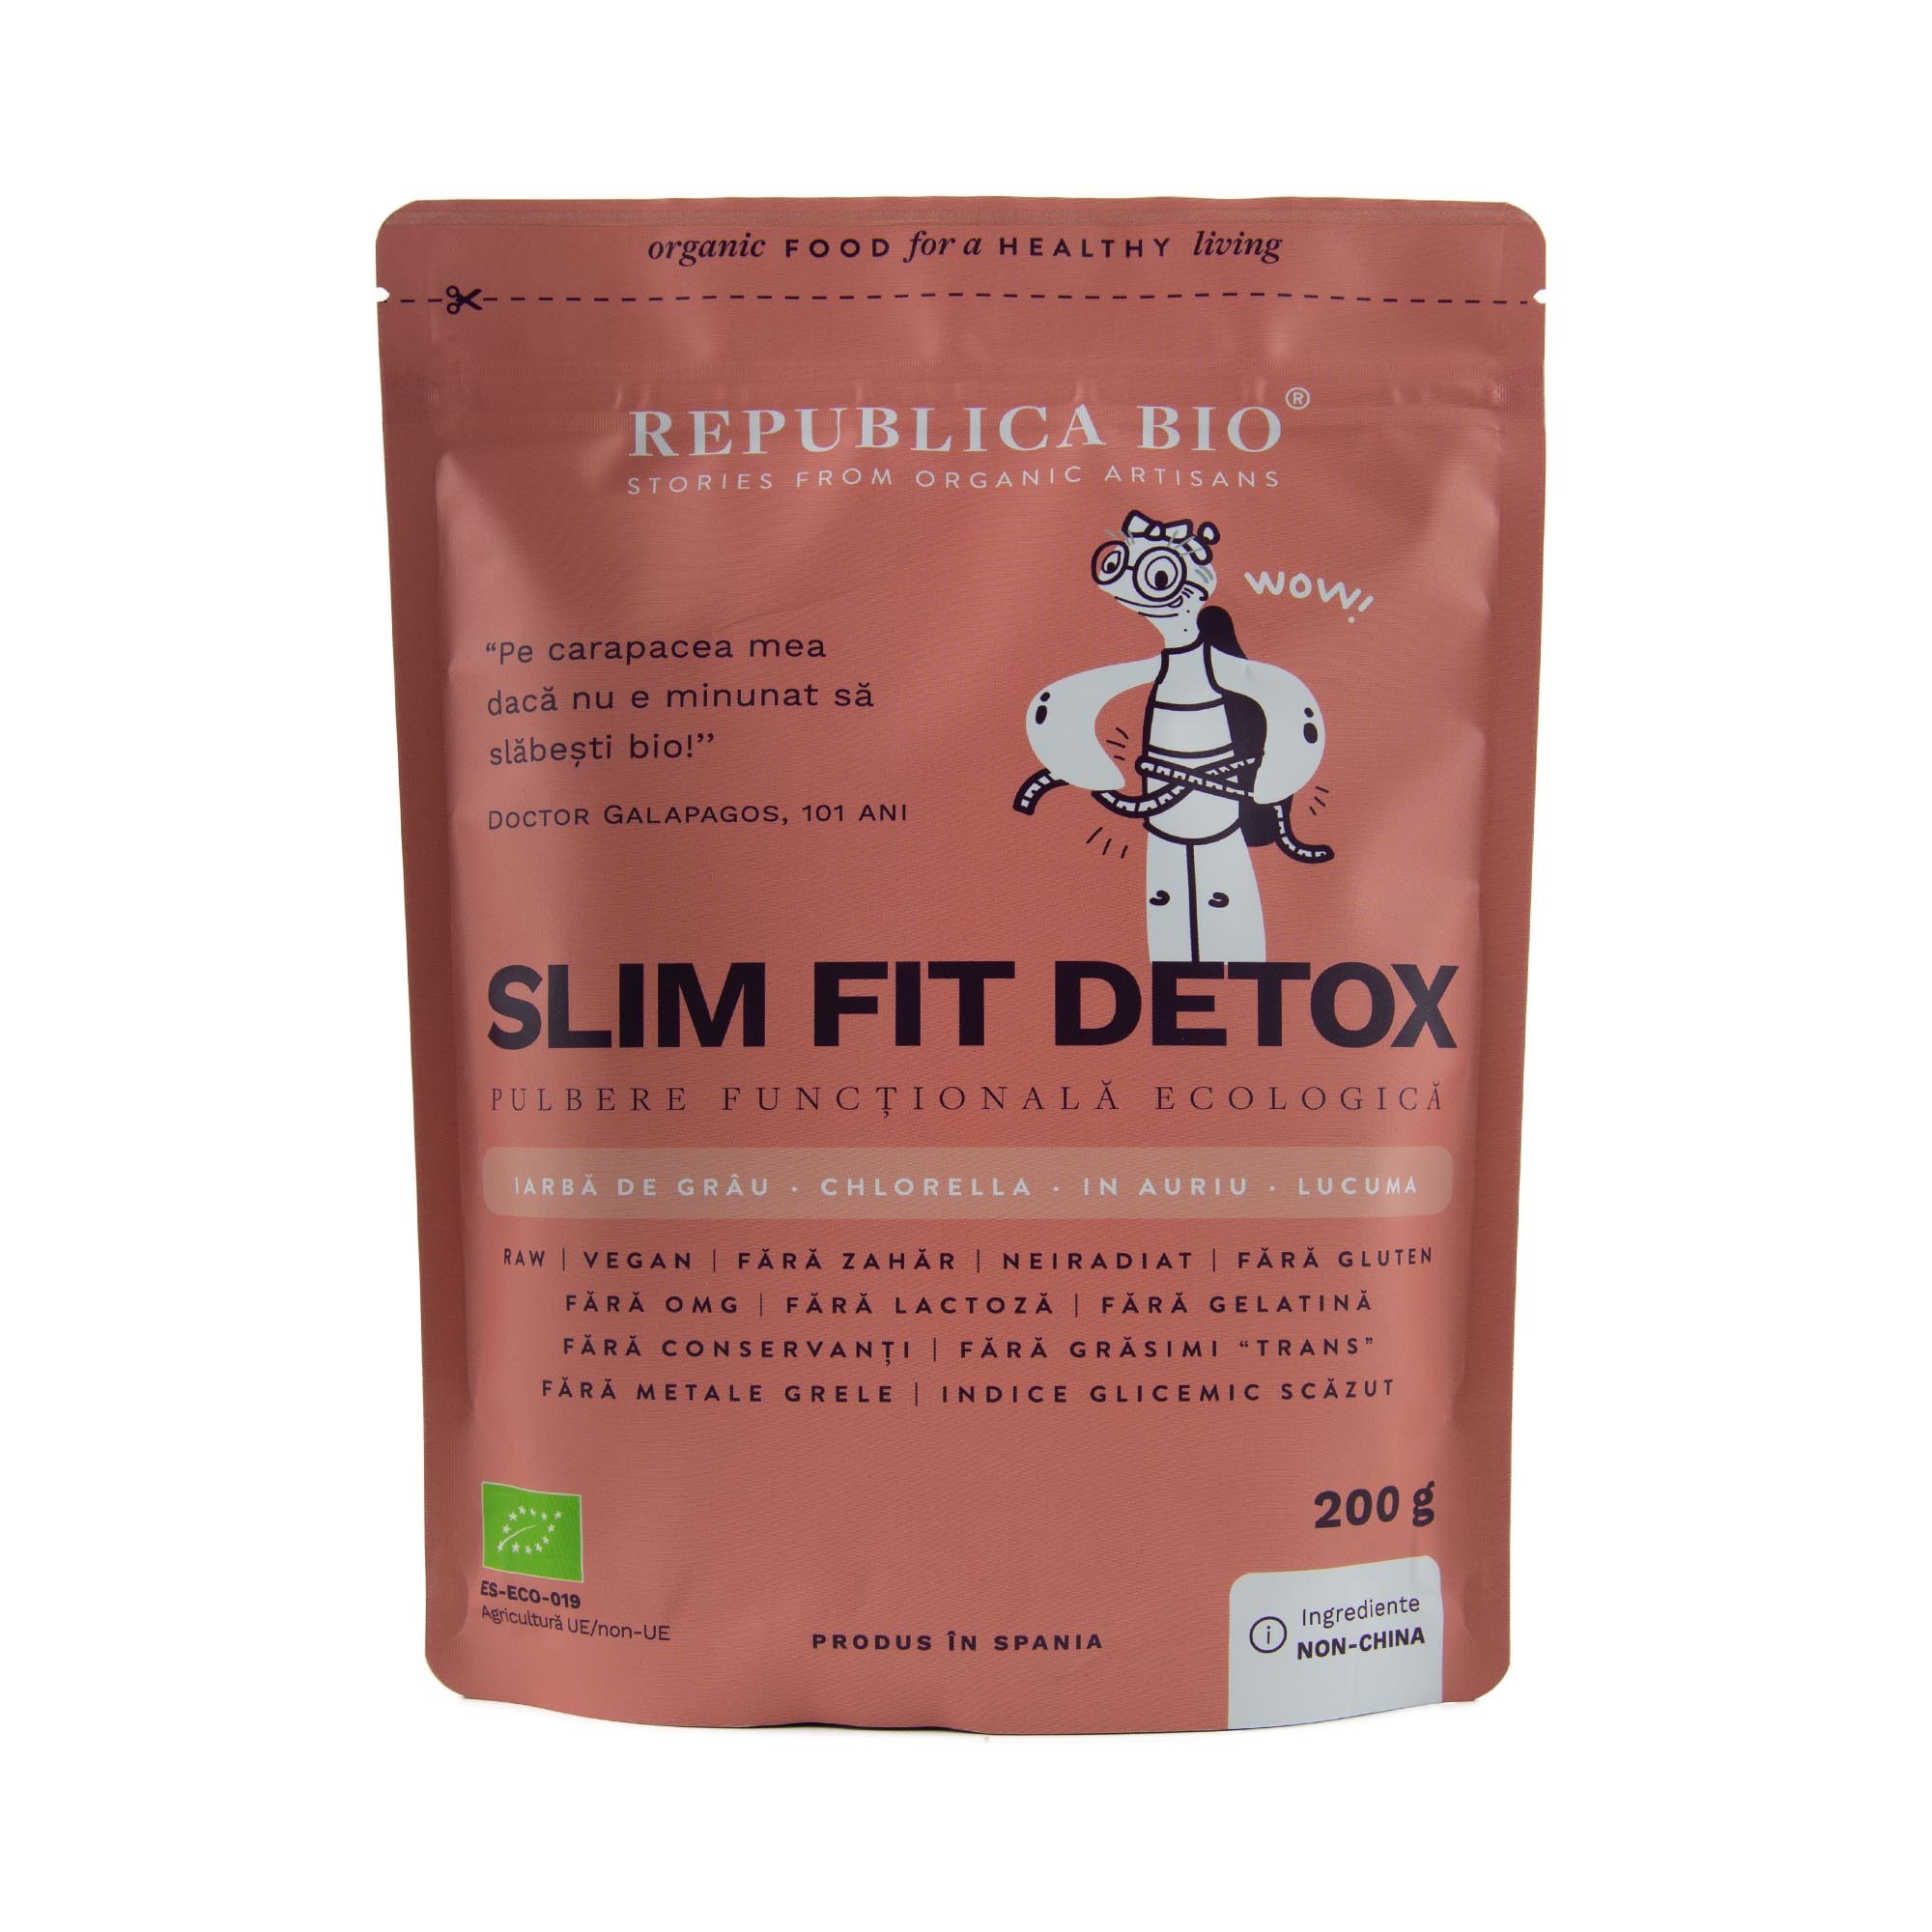 Slim Fit Detox, Pulbere Functionala Ecologica Republica Bio, 200 G